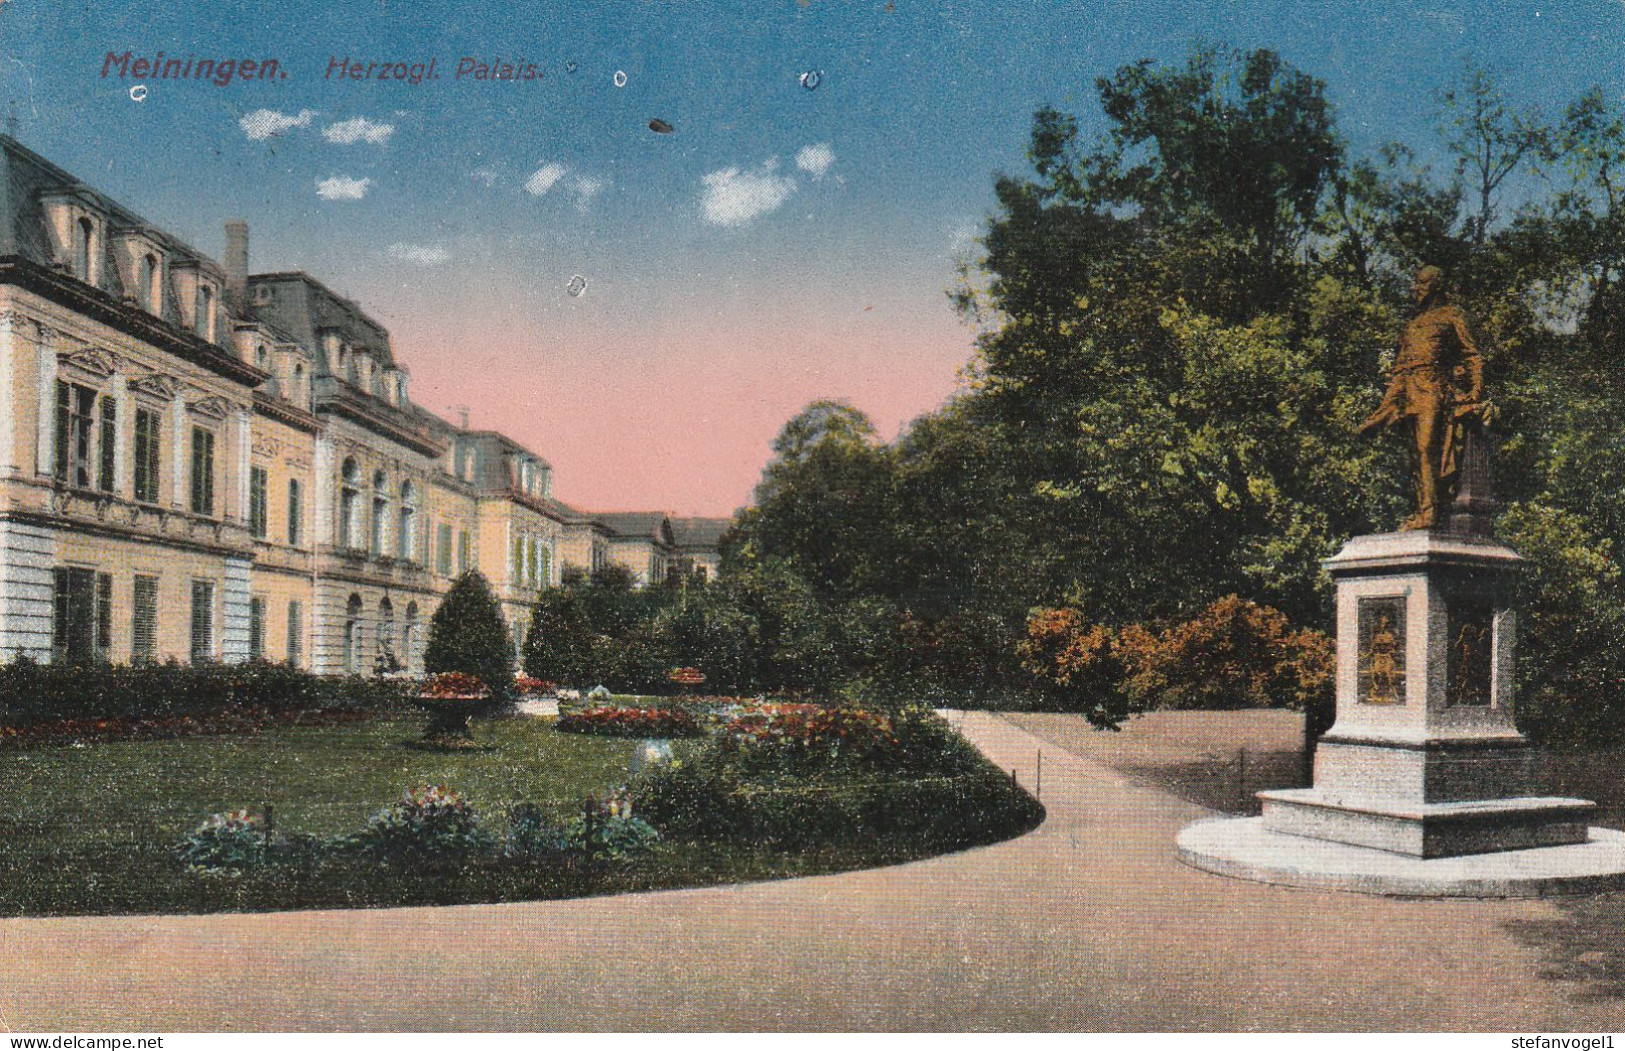 Meiningen  Herzogl. Palais  Gel. 1922 - Meiningen